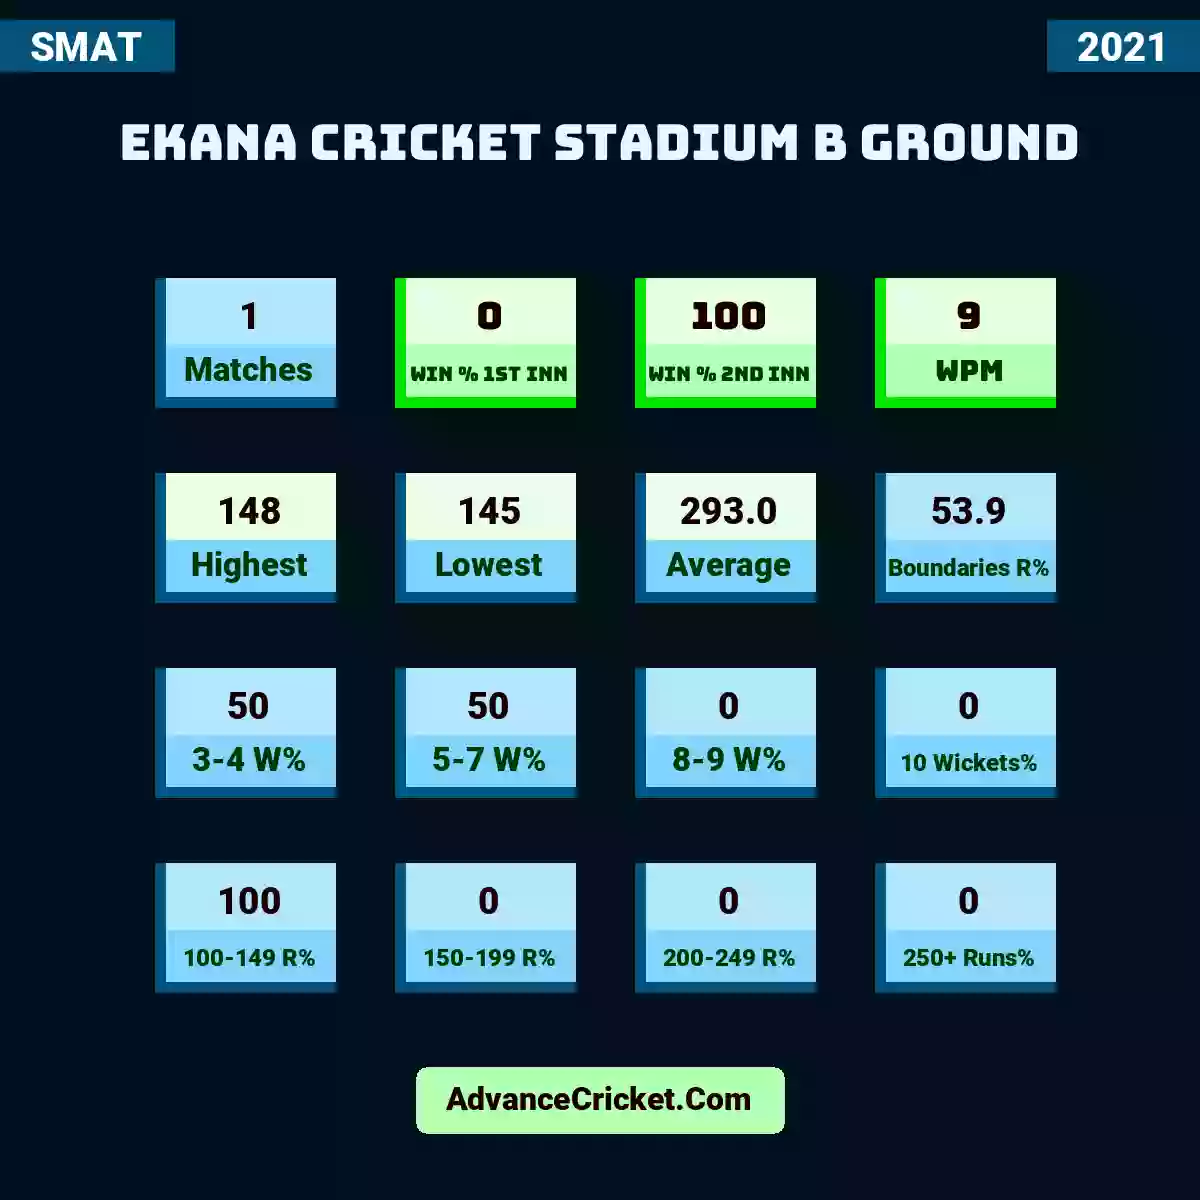 Image showing Ekana Cricket Stadium B ground with Matches: 1, Win % 1st Inn: 0, Win % 2nd Inn: 100, WPM: 9, Highest: 148, Lowest: 145, Average: 293.0, Boundaries R%: 53.9, 3-4 W%: 50, 5-7 W%: 50, 8-9 W%: 0, 10 Wickets%: 0, 100-149 R%: 100, 150-199 R%: 0, 200-249 R%: 0, 250+ Runs%: 0.